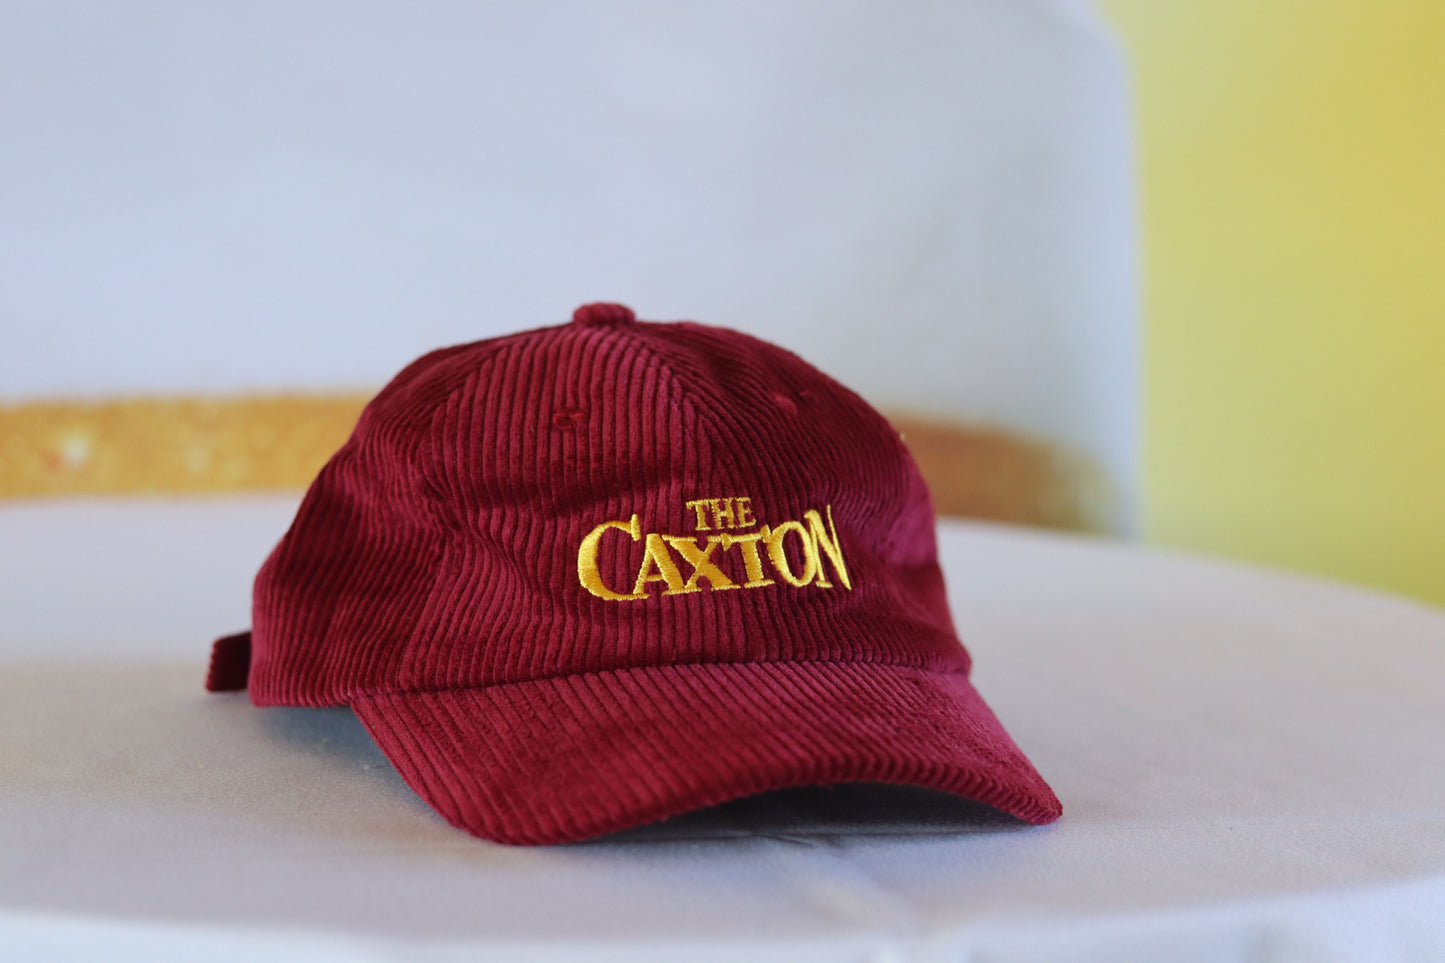 Caxton Cord Cap in Maroon